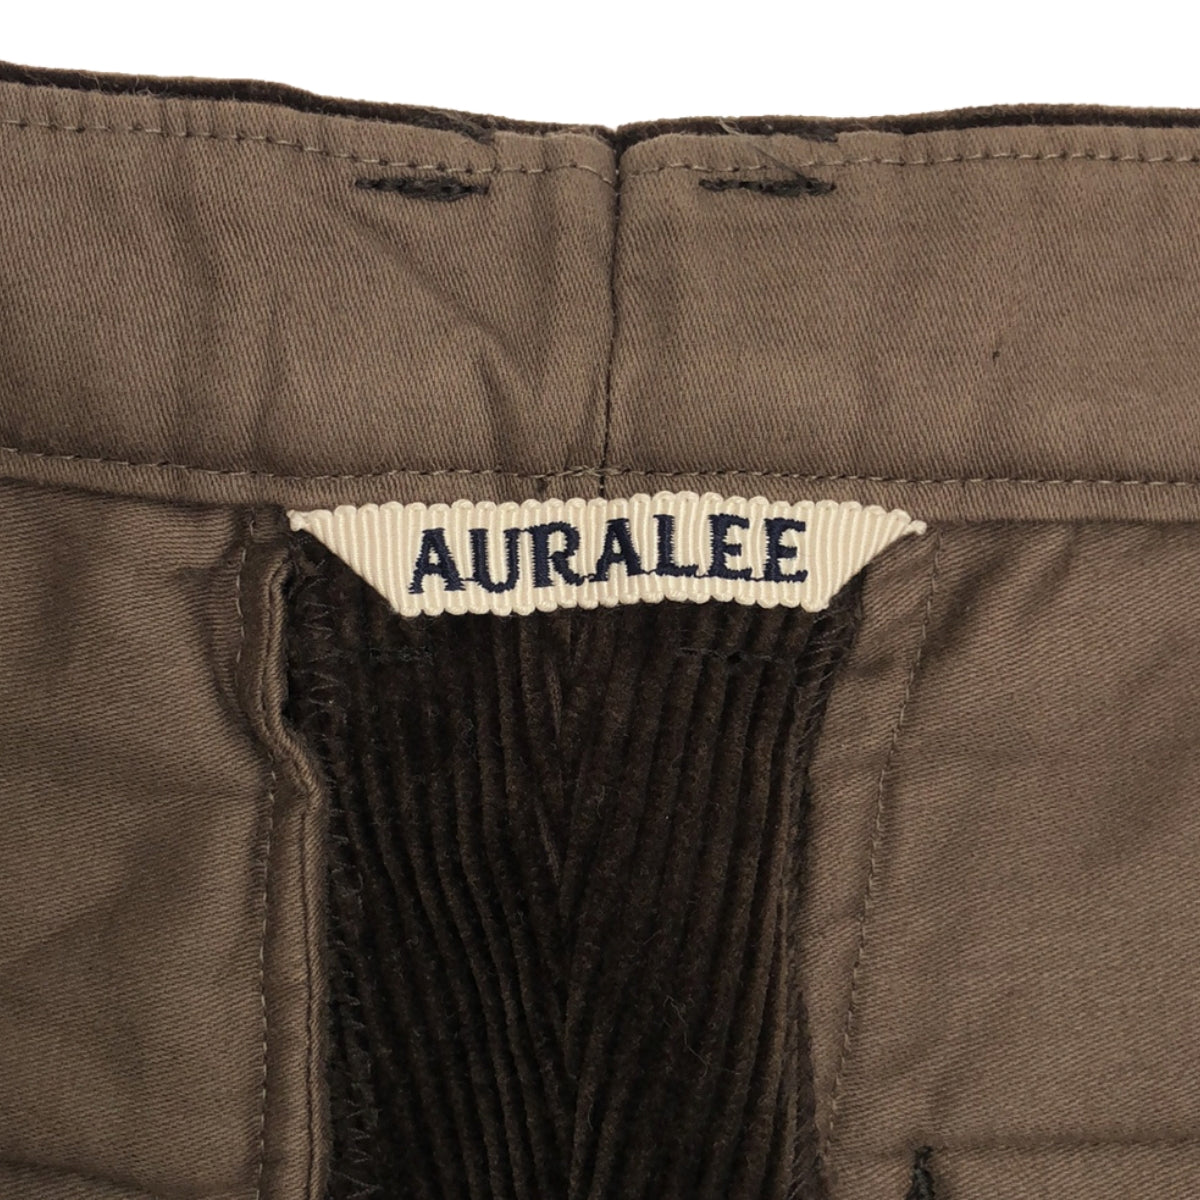 AURALEE / オーラリー | WASHED CORDUROY WIDE SLACKS / コーデュロイ ワイドスラックス パンツ | 1 | レディース